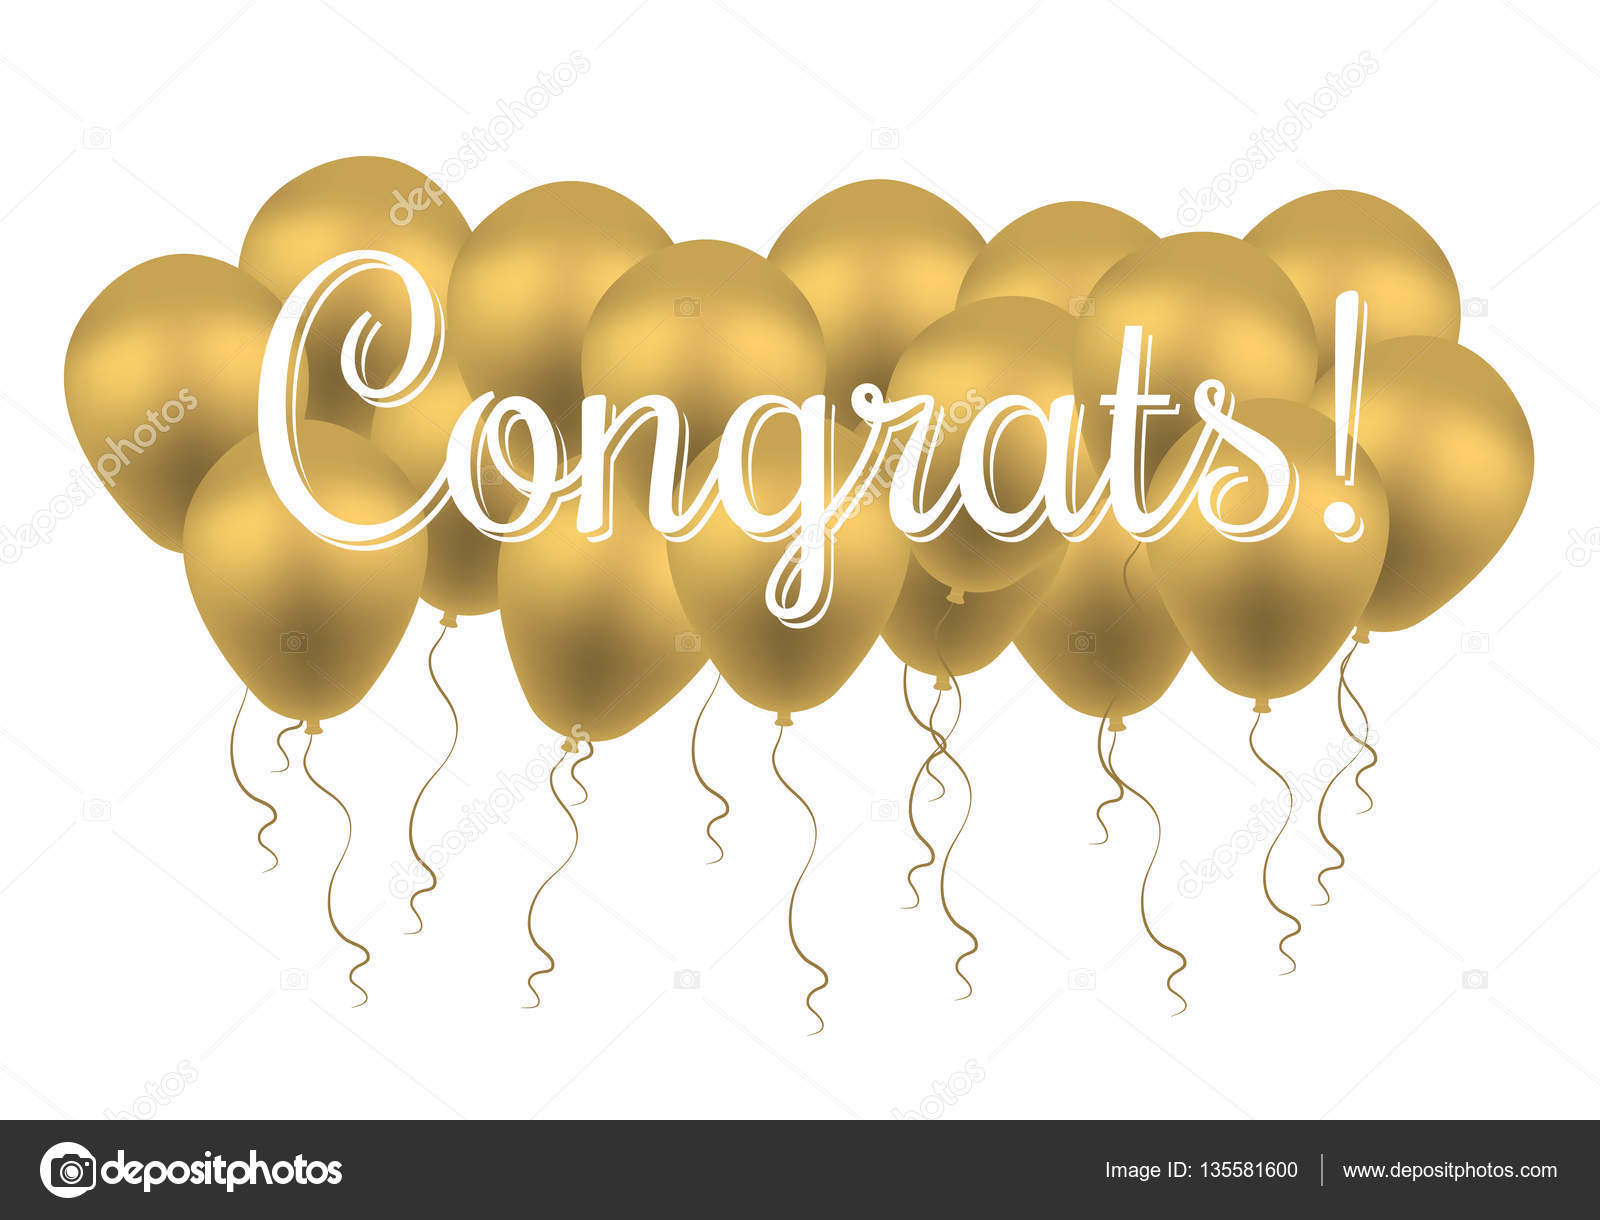 Congrats! Congratulations Vector Banner with Golden Balloons and With Regard To Congratulations Banner Template